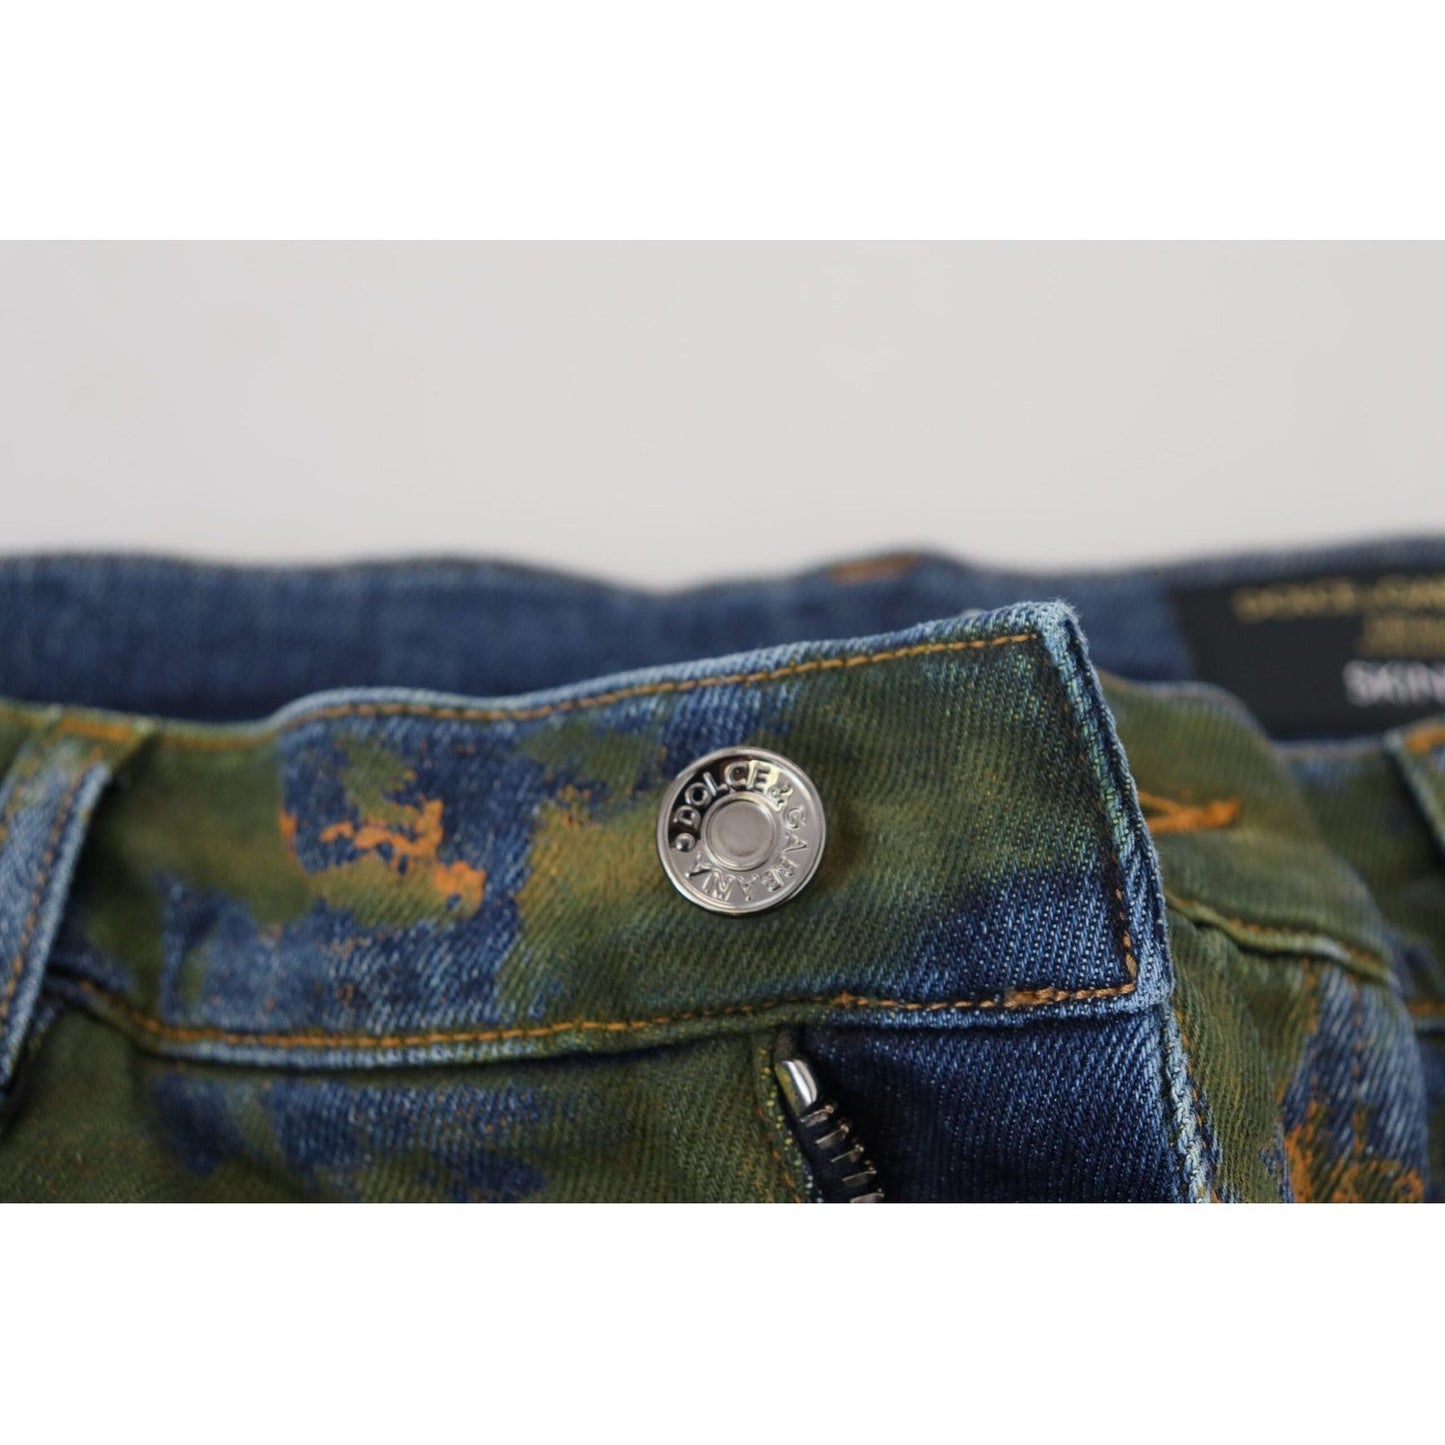 Dolce & Gabbana Chic Slim-Fit Denim Jeans in Green Wash blue-green-skinny-cotton-denim-jeans IMG_6836-scaled-22f532e3-c75.jpg